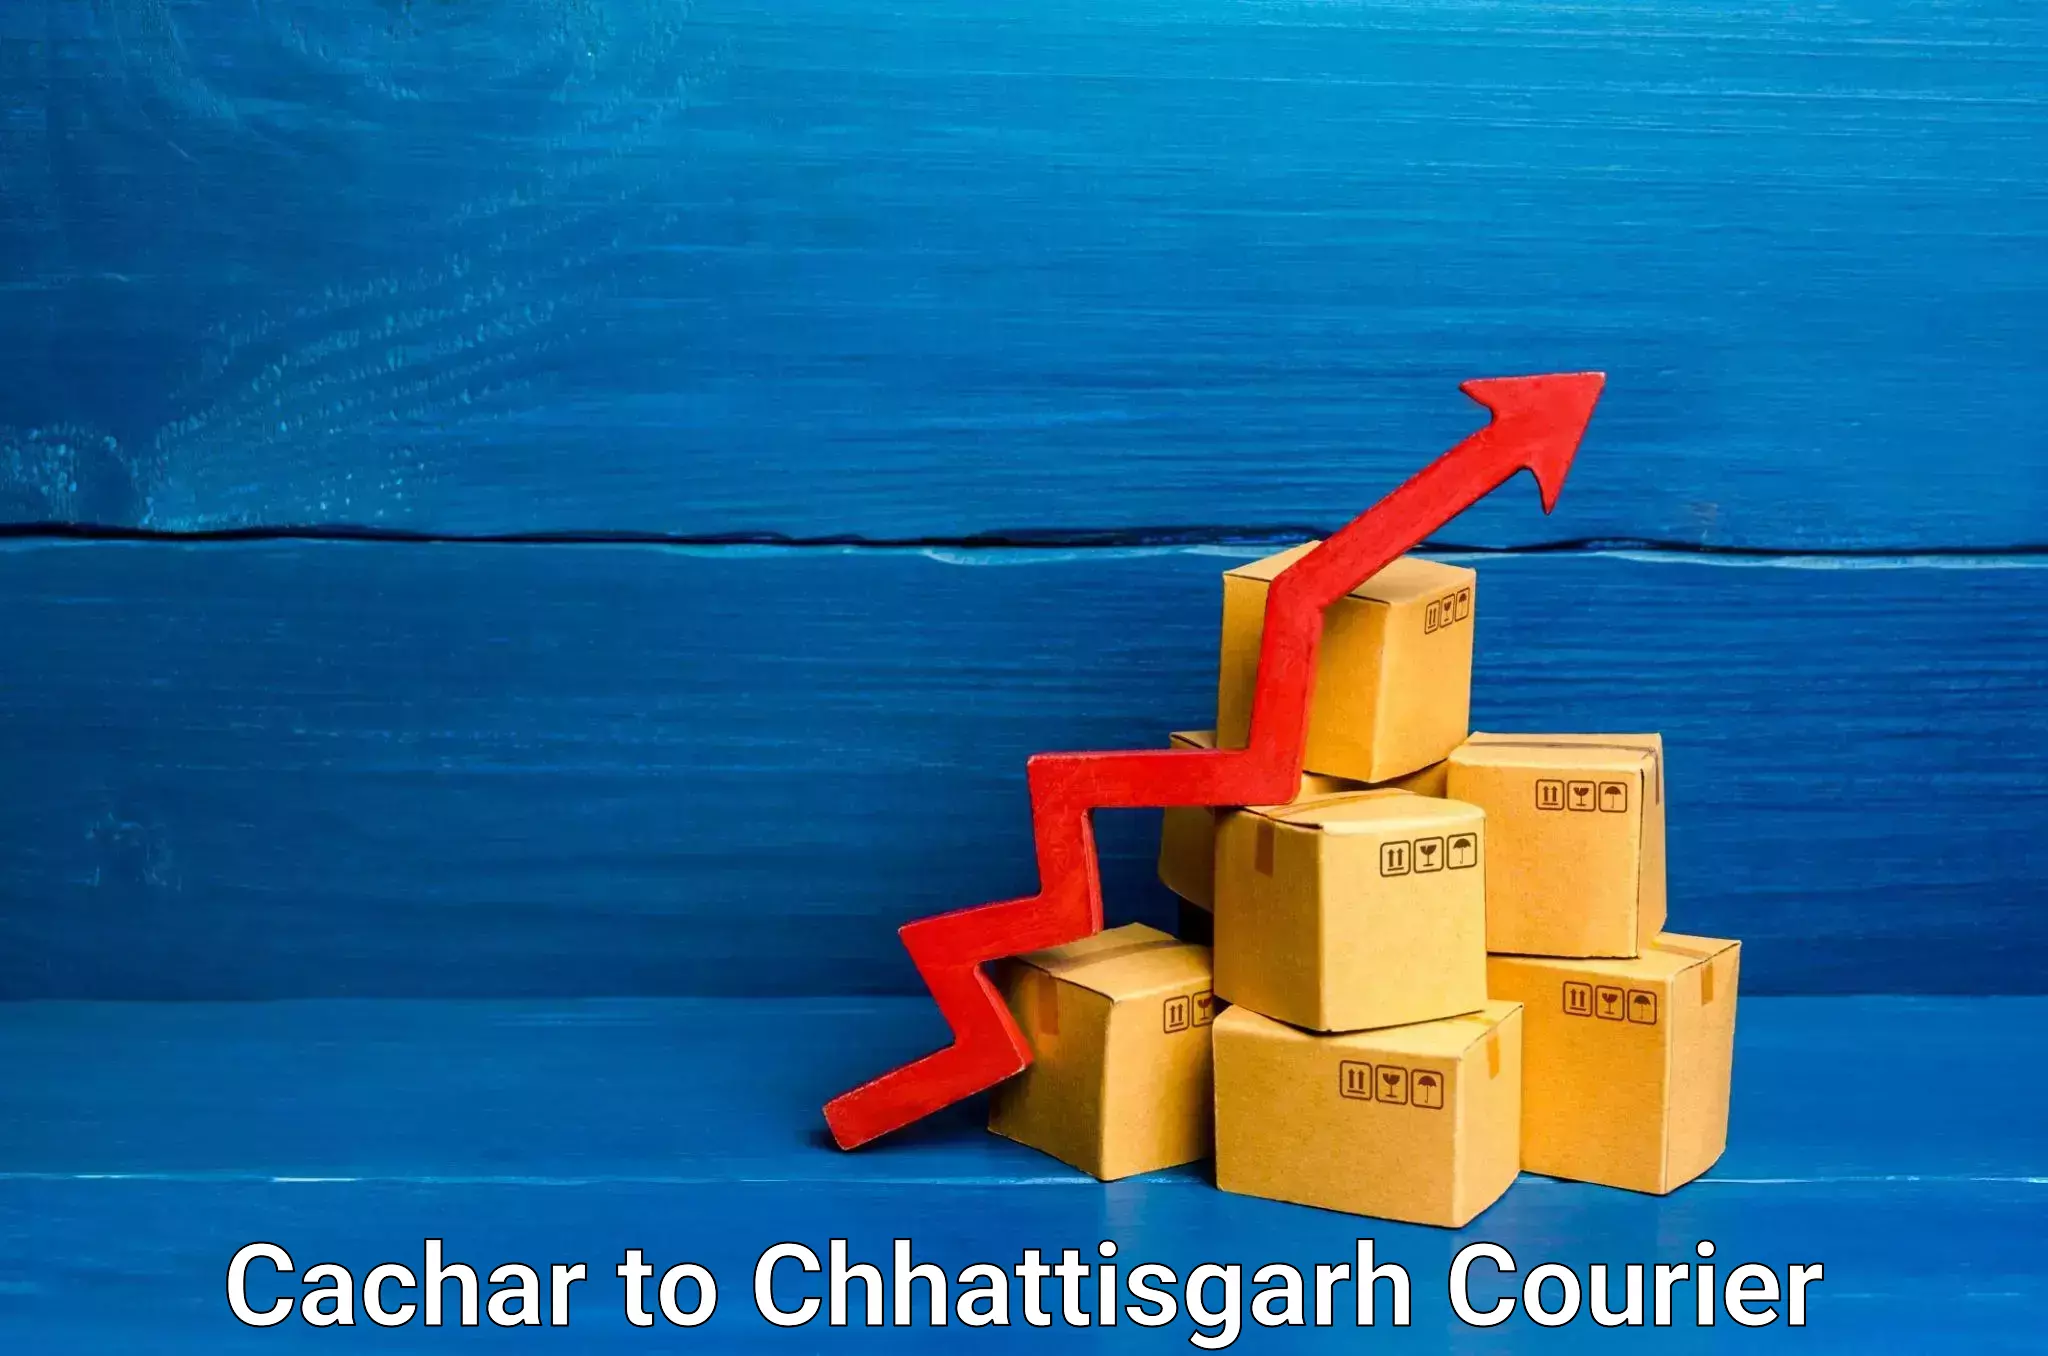 Efficient cargo handling Cachar to Jagdalpur